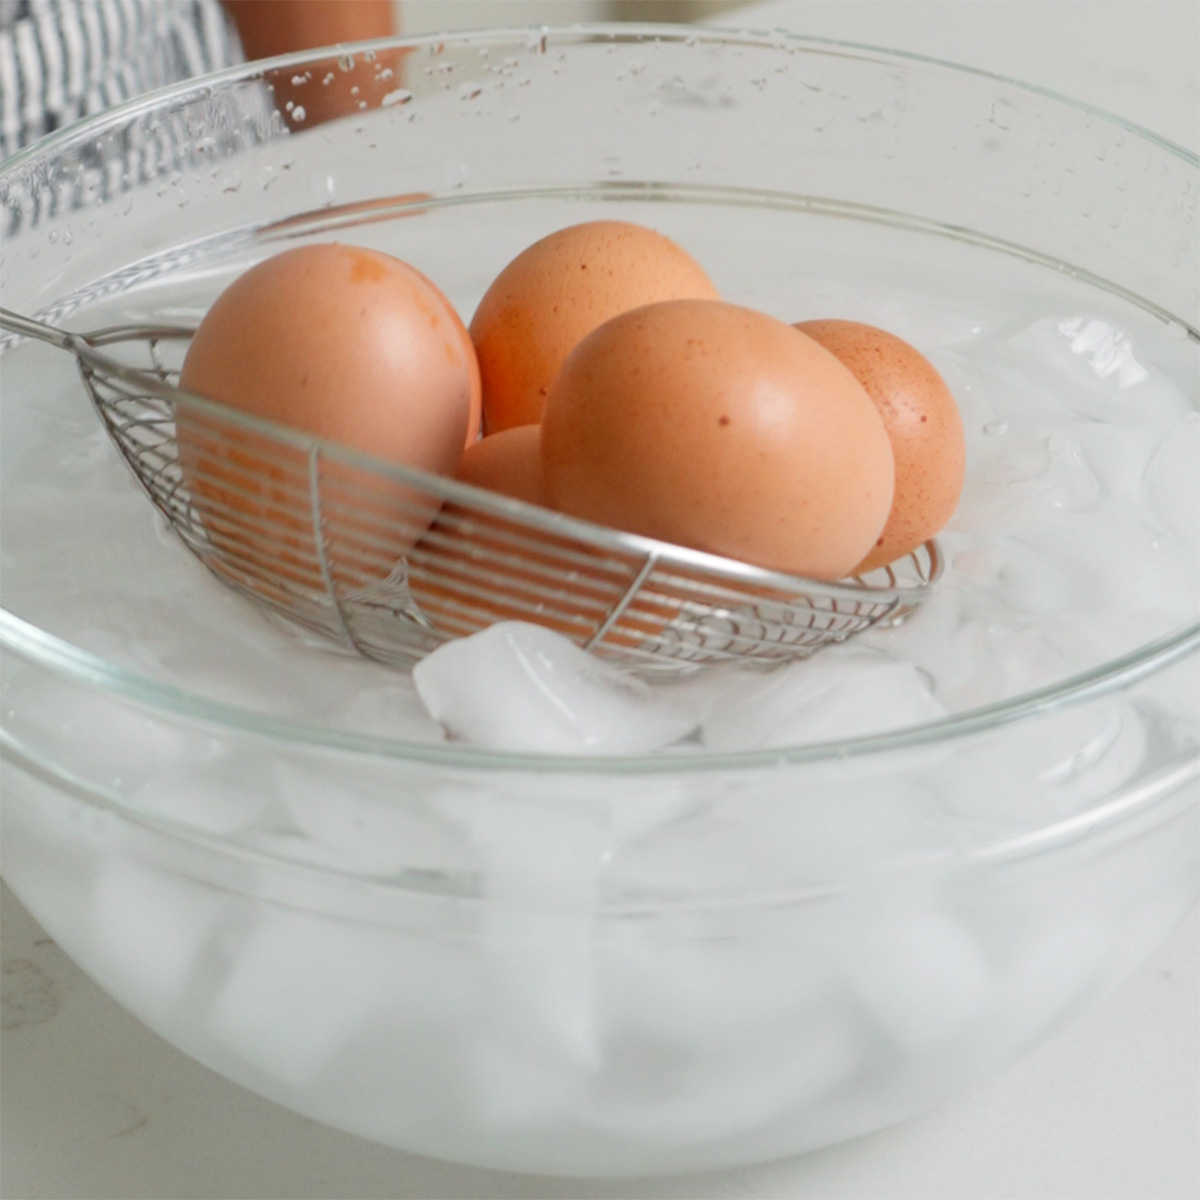 Placing freshly soft boiled eggs into an ice bath.